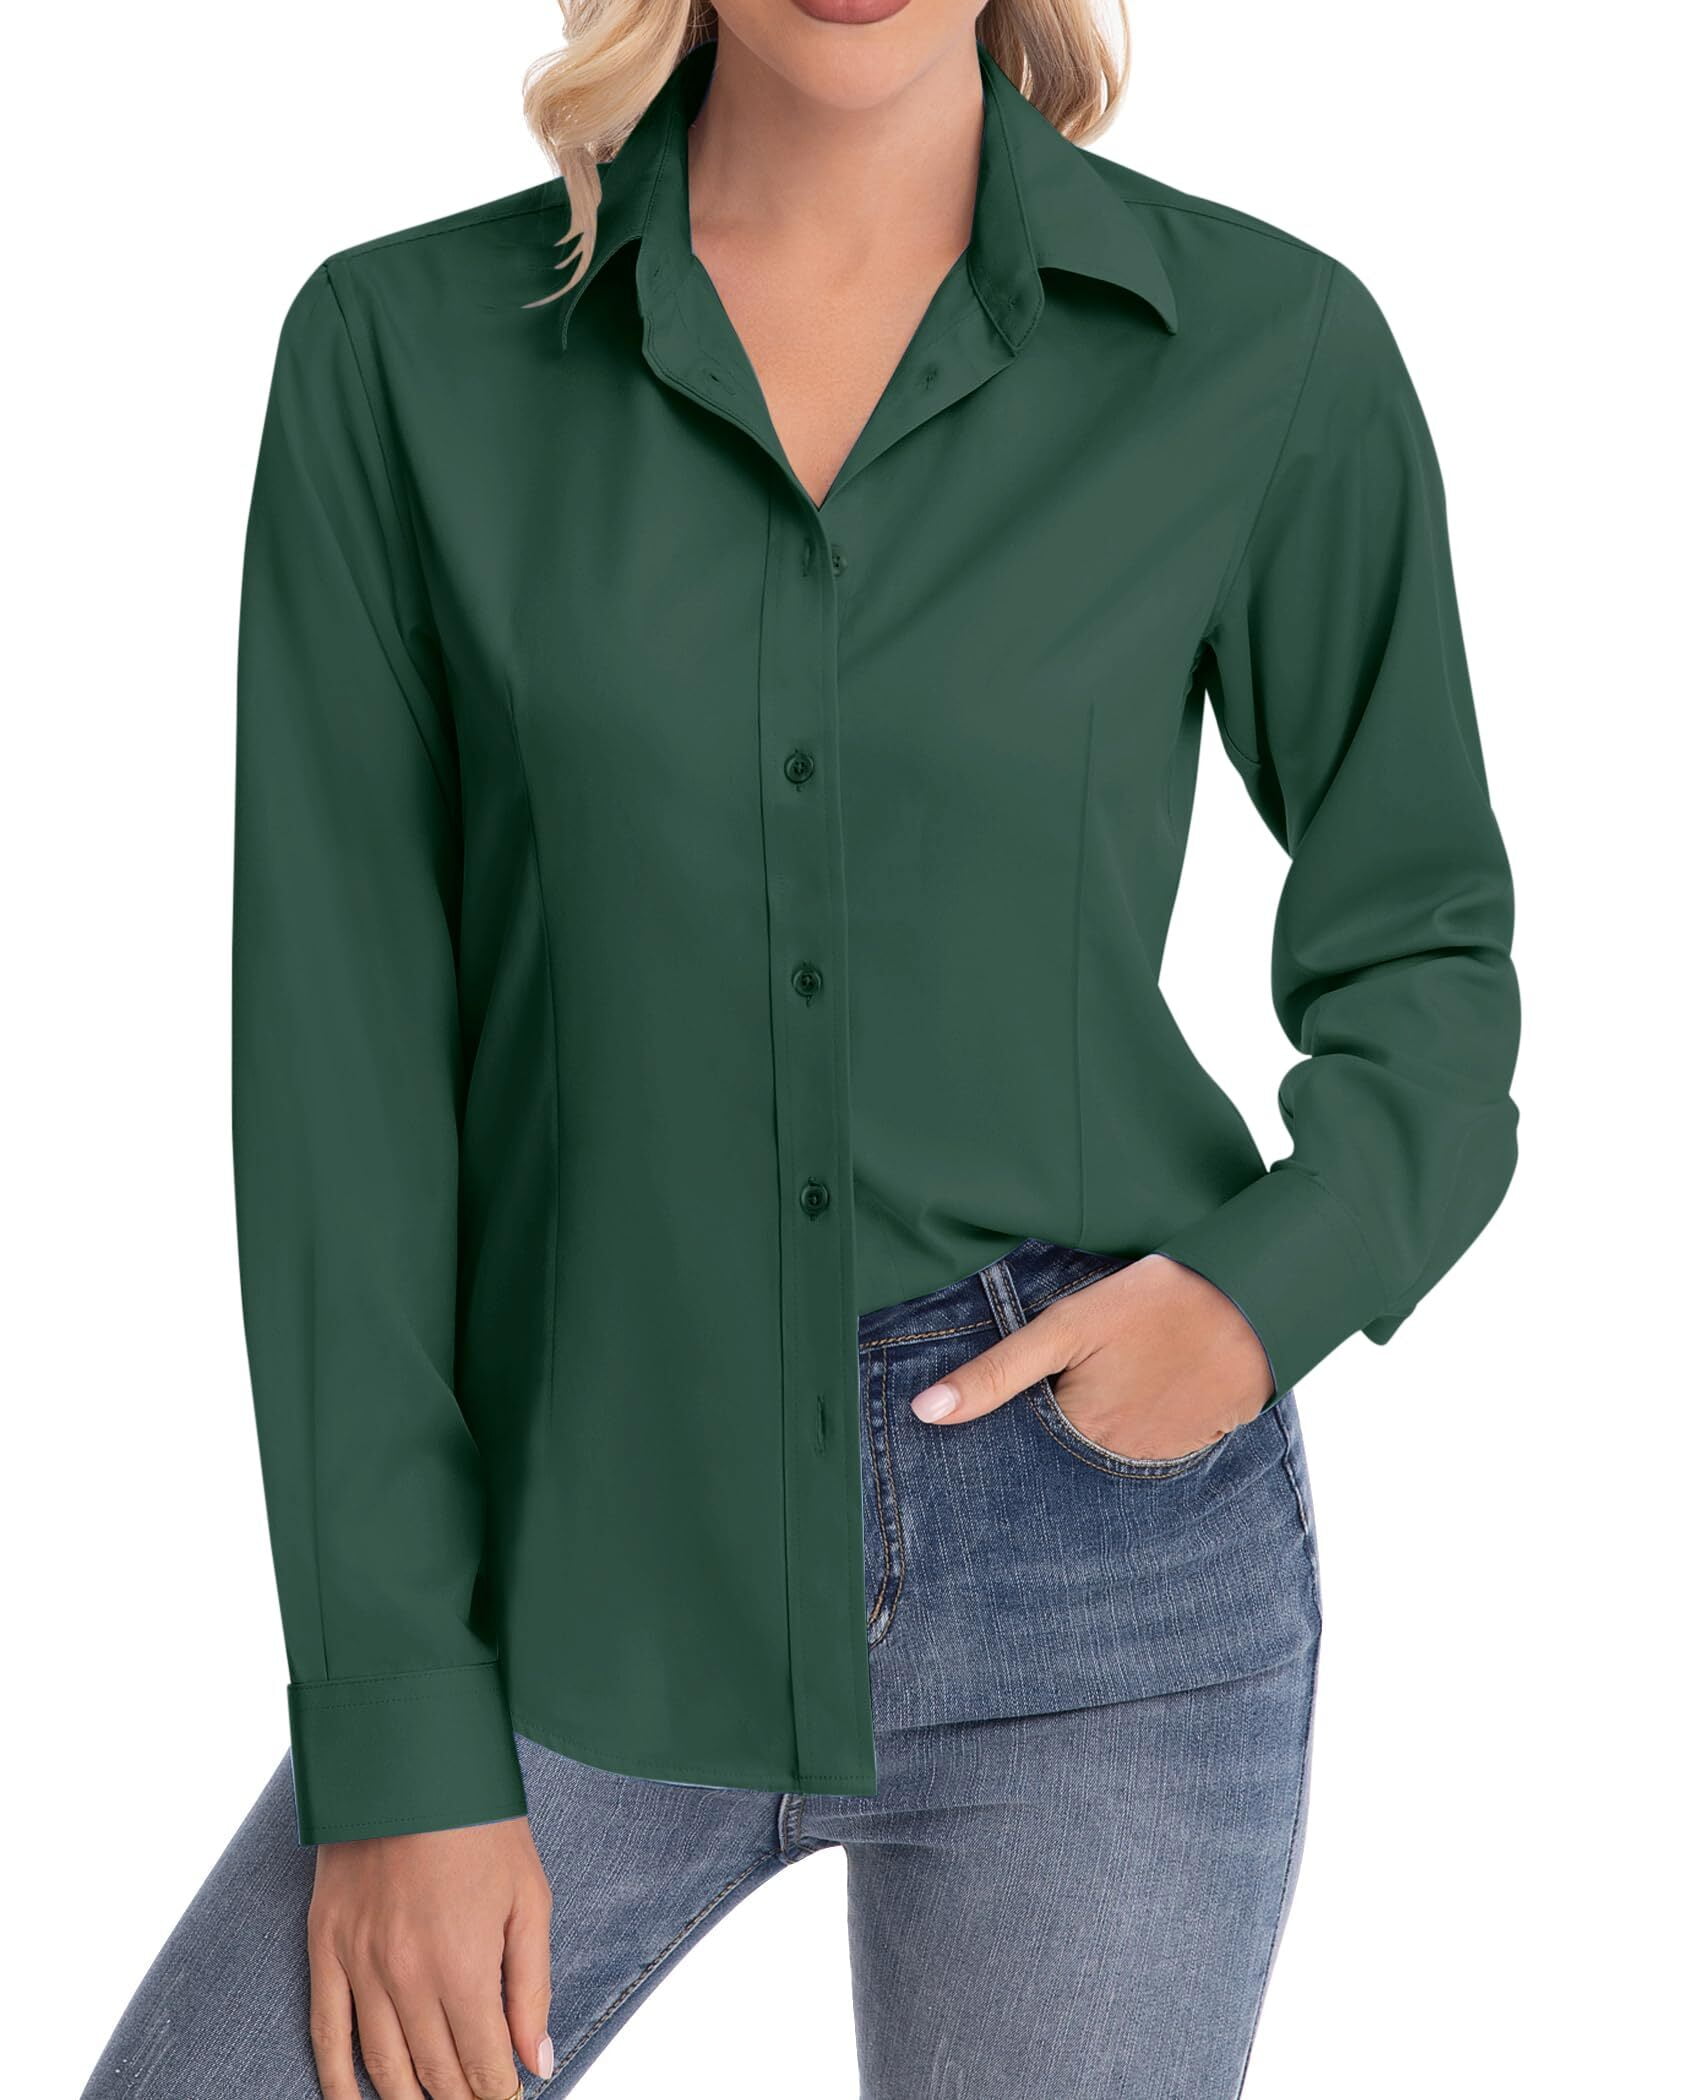 Siliteelon Women's Long Sleeve Button Down Shirts Wrinkle-Free Office ...